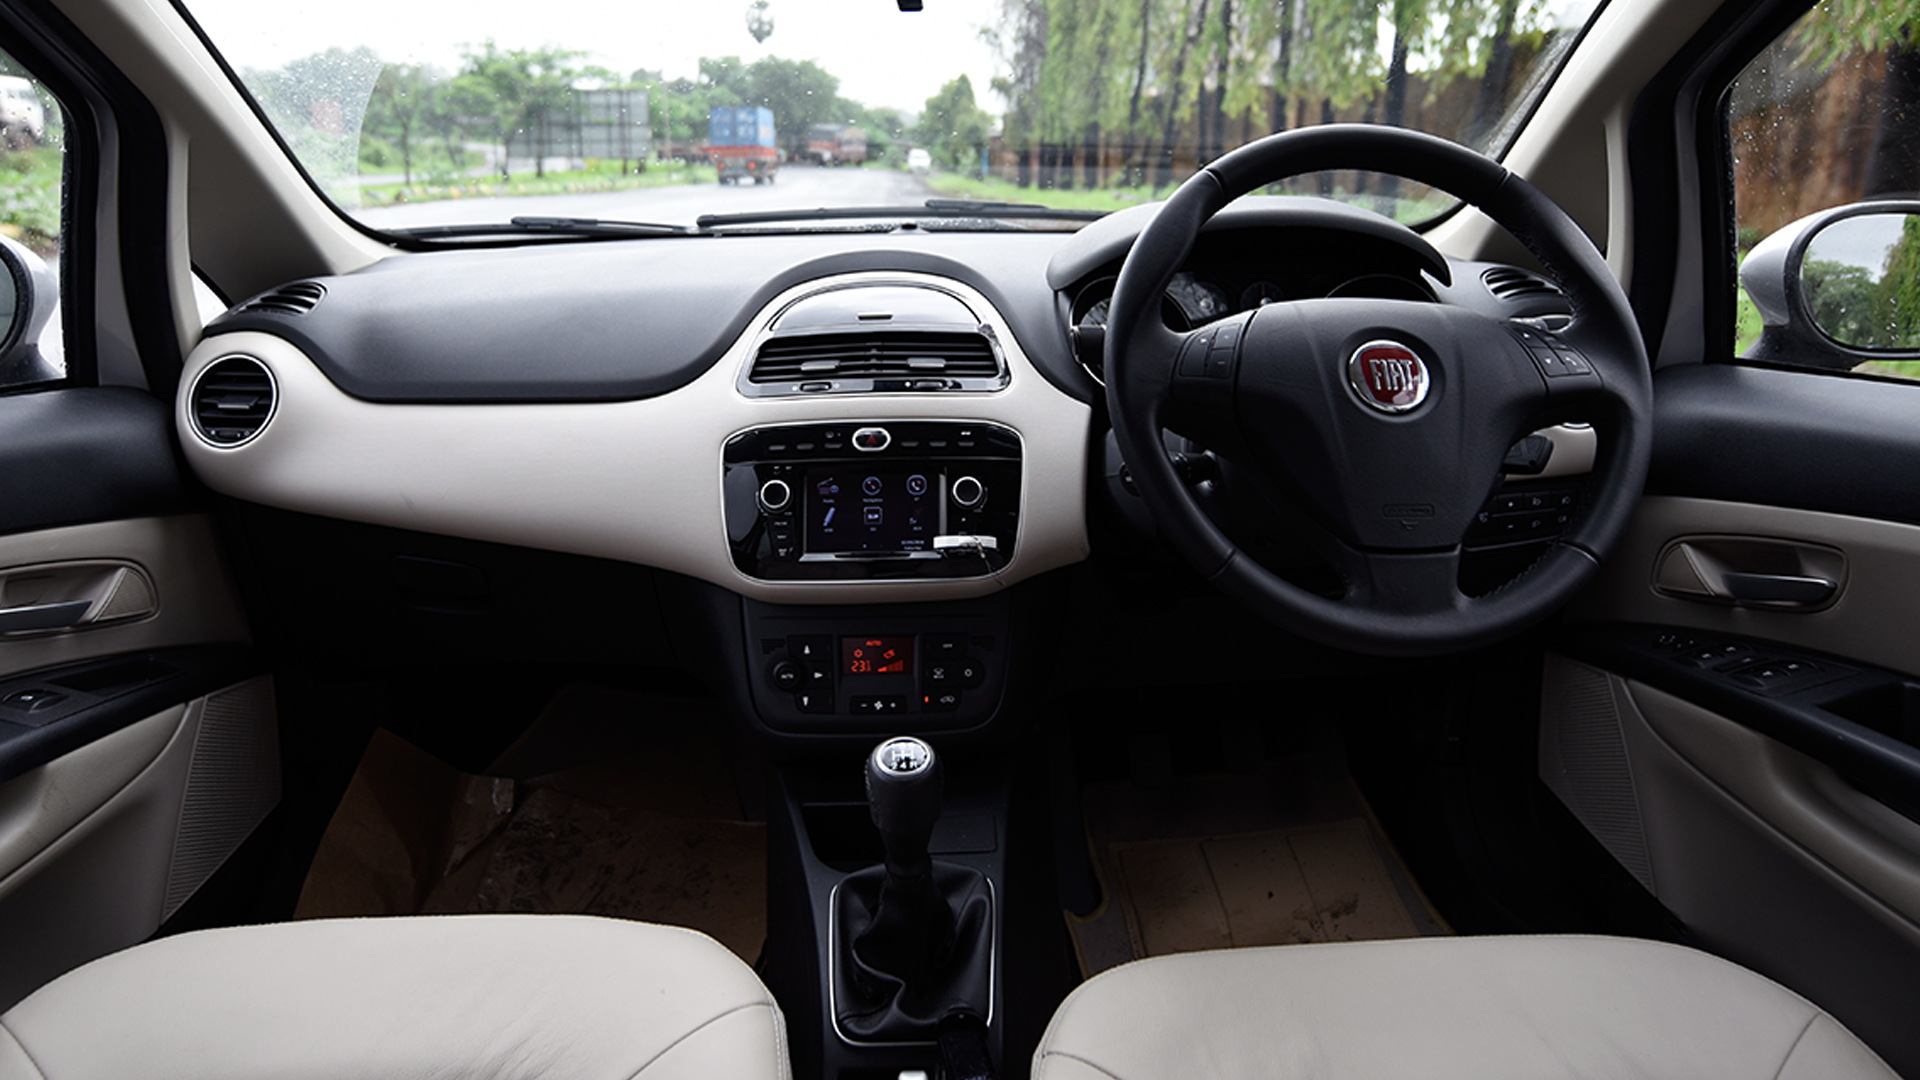 Fiat Linea 125 S 2016 T Jet Emotion Interior Car Photos